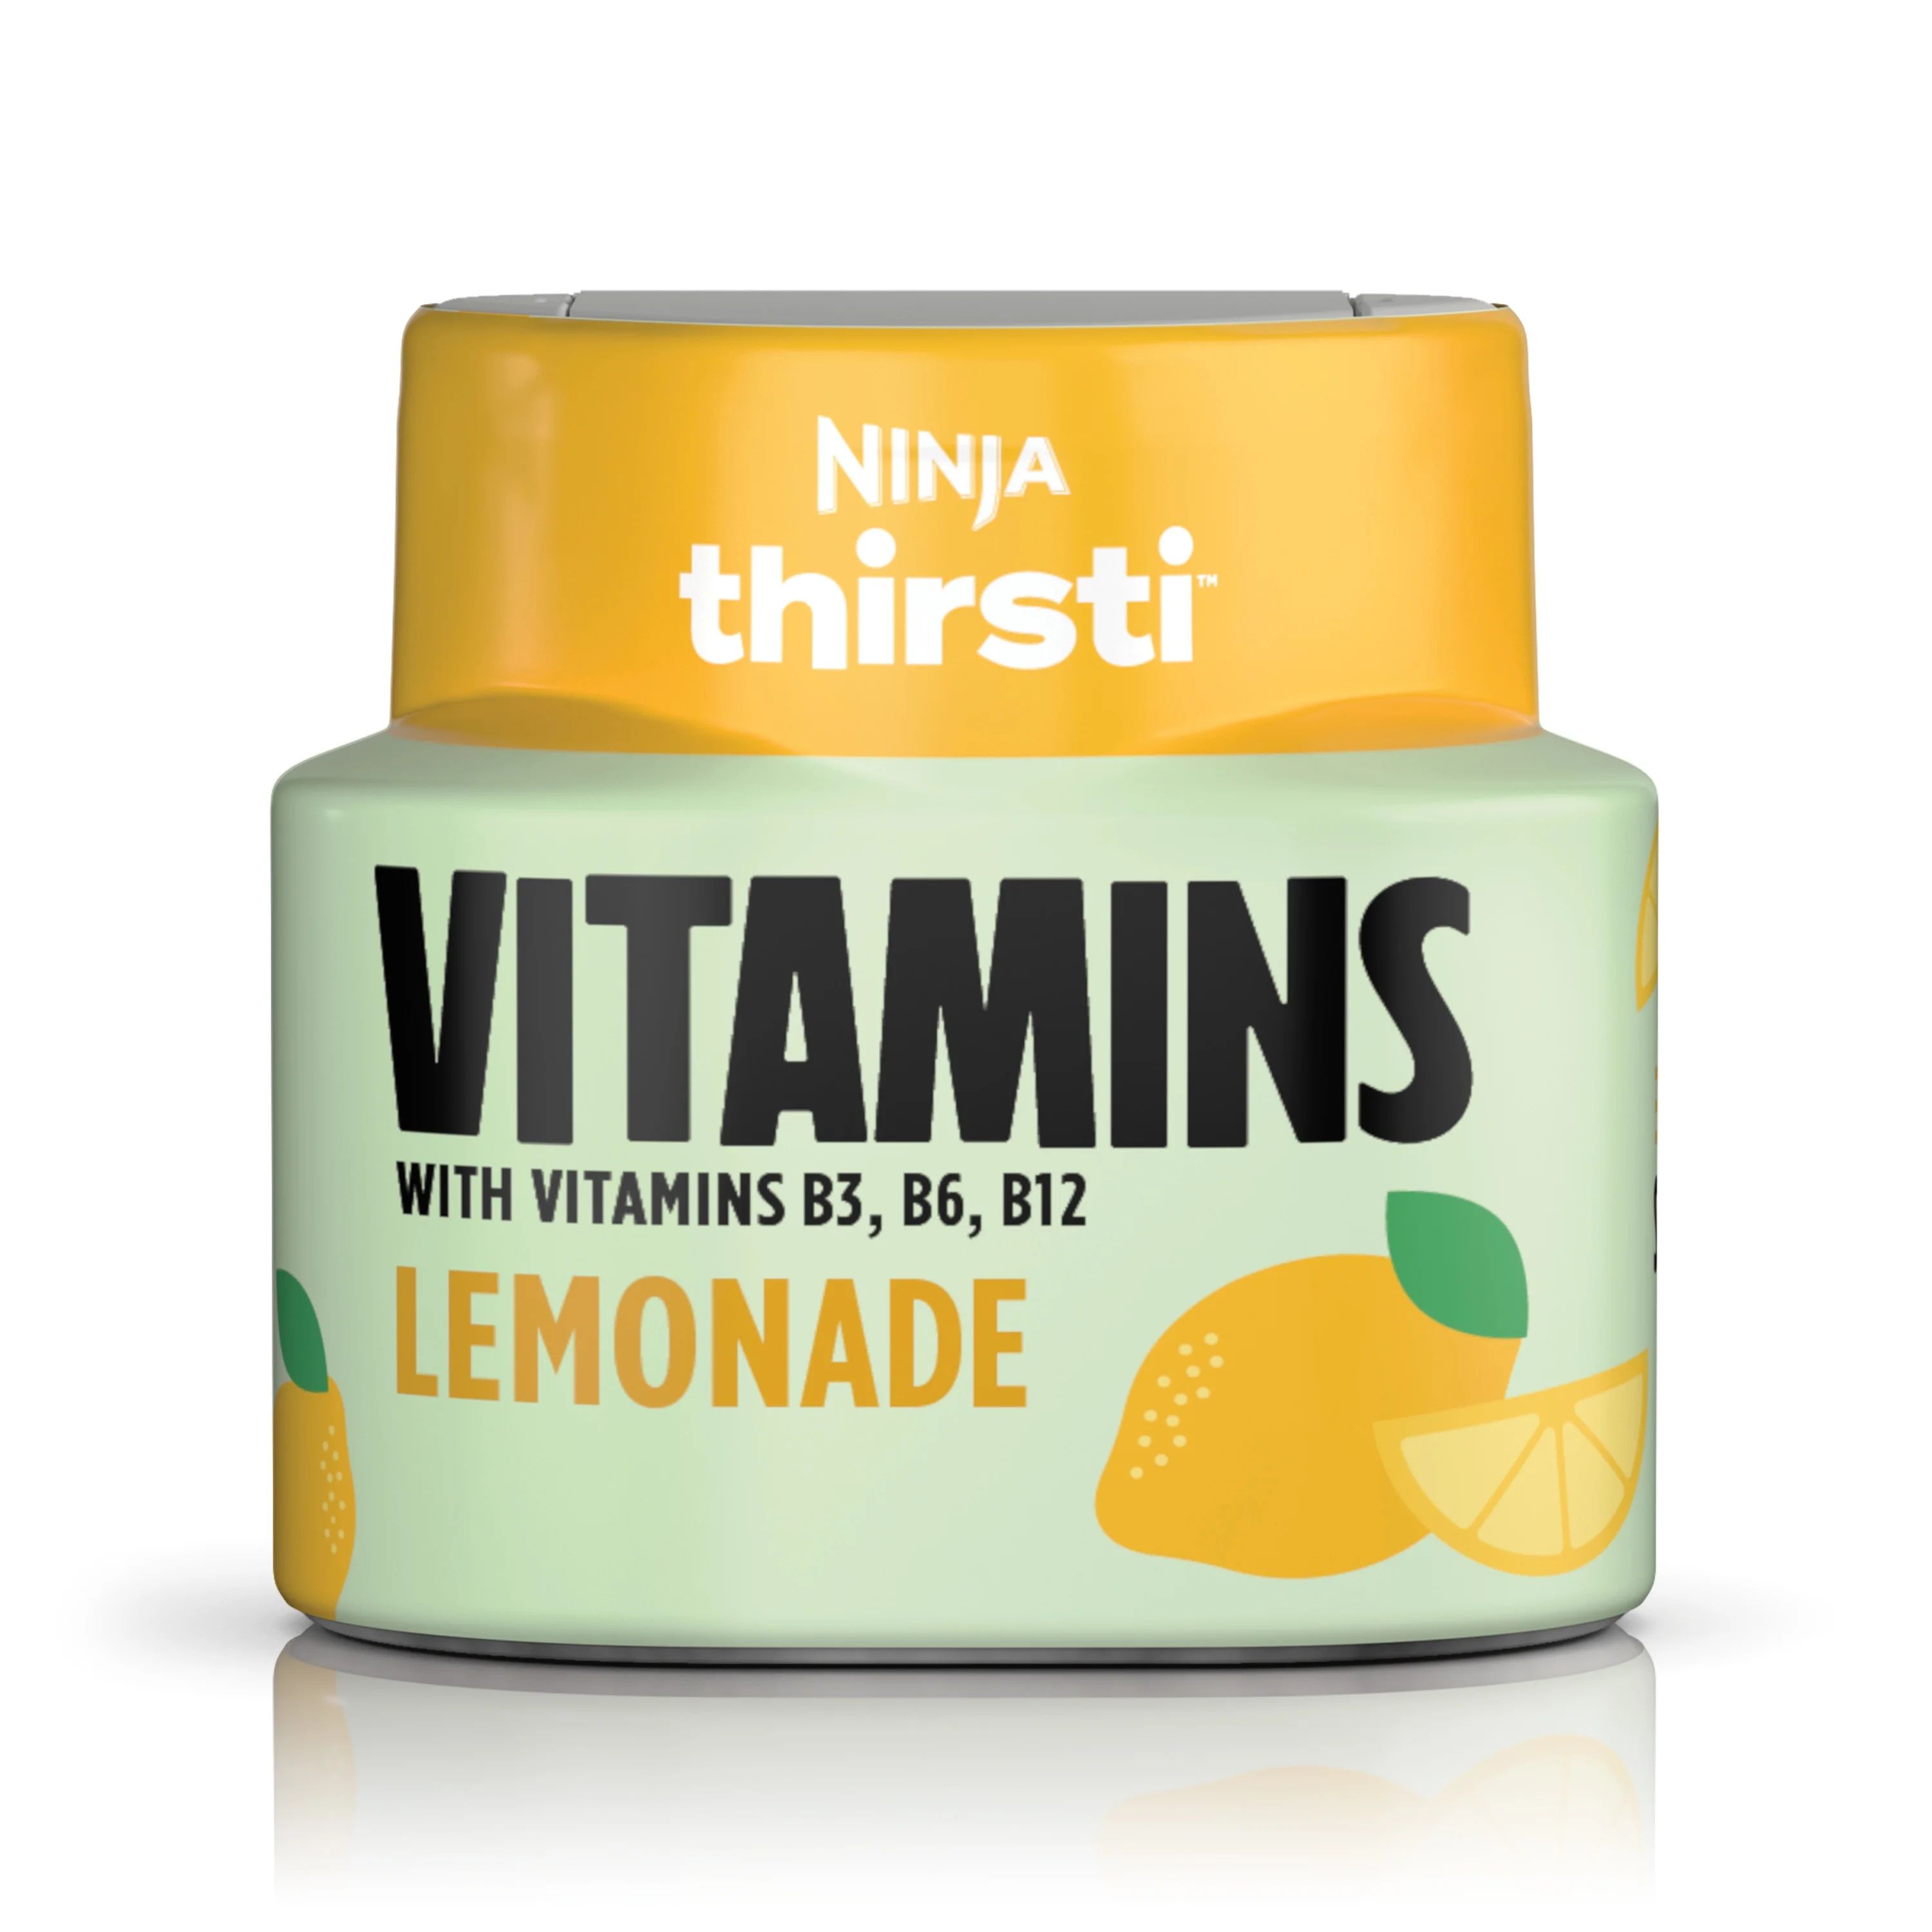 Ninja Thirsti VITAMINS Lemonade Flavored Water Drops, WCFLMND6 | Walmart (US)